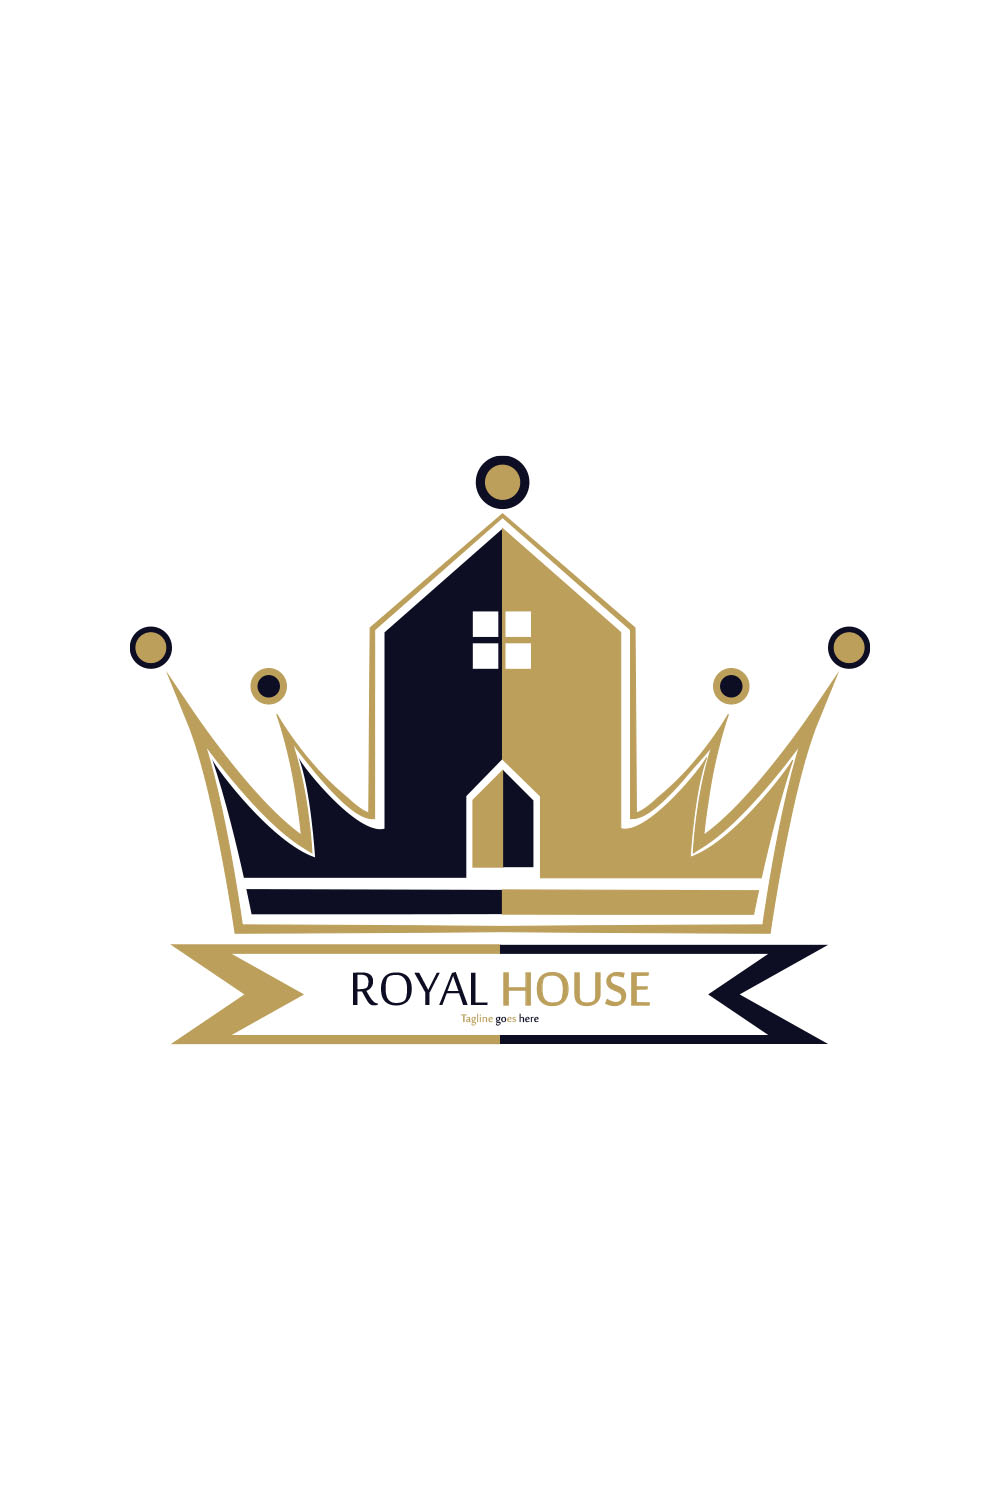 Royal House Logo Pinterest collage image.